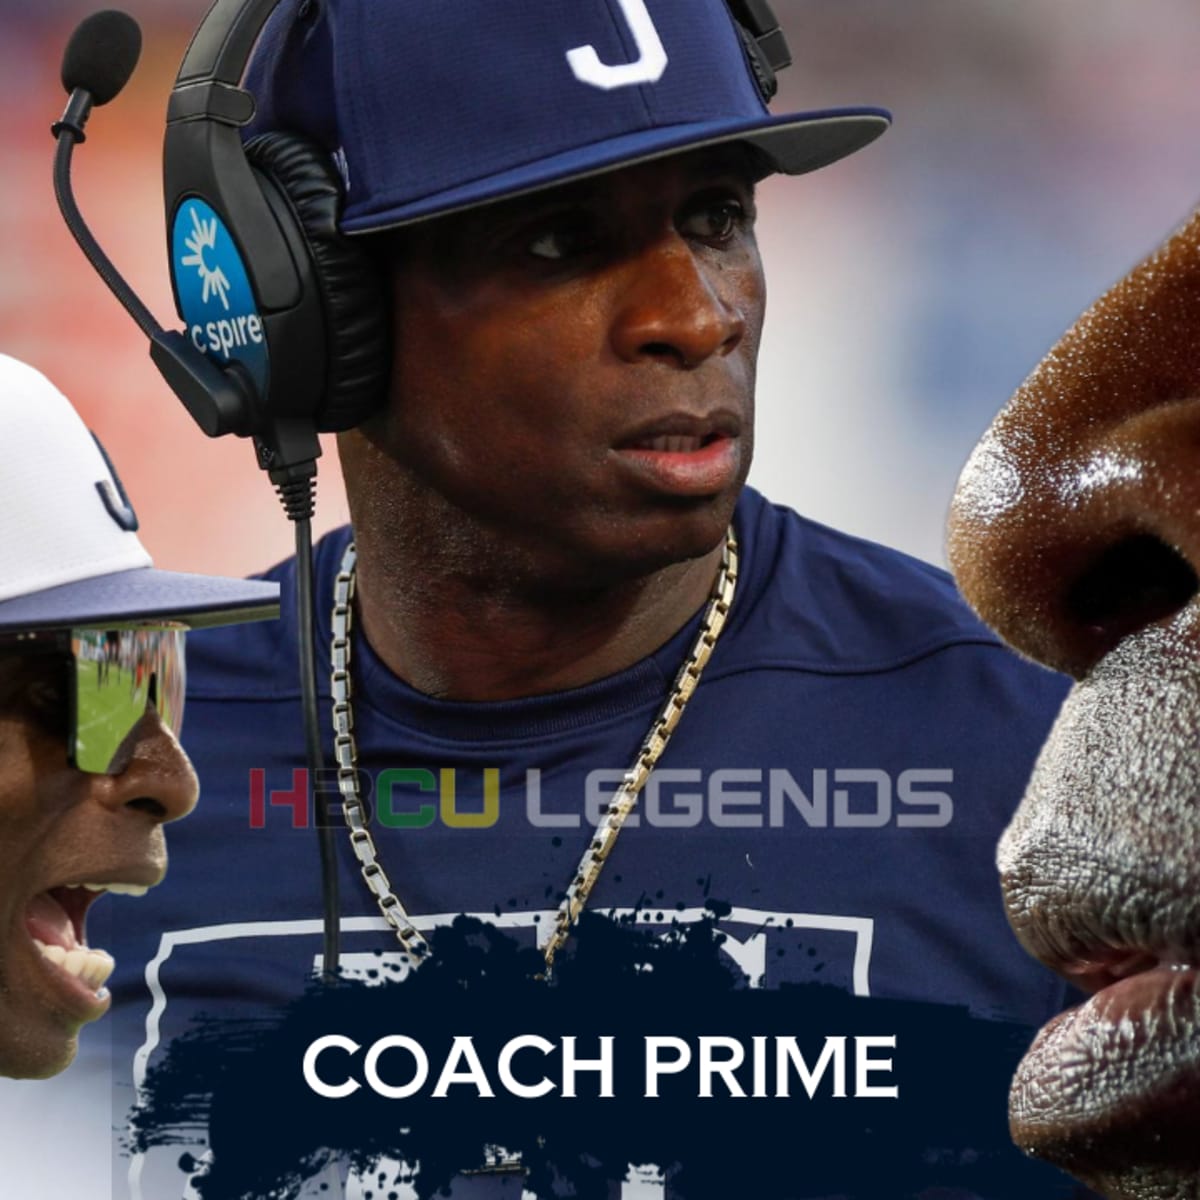 Coach Prime has players rocking social media handles, not names